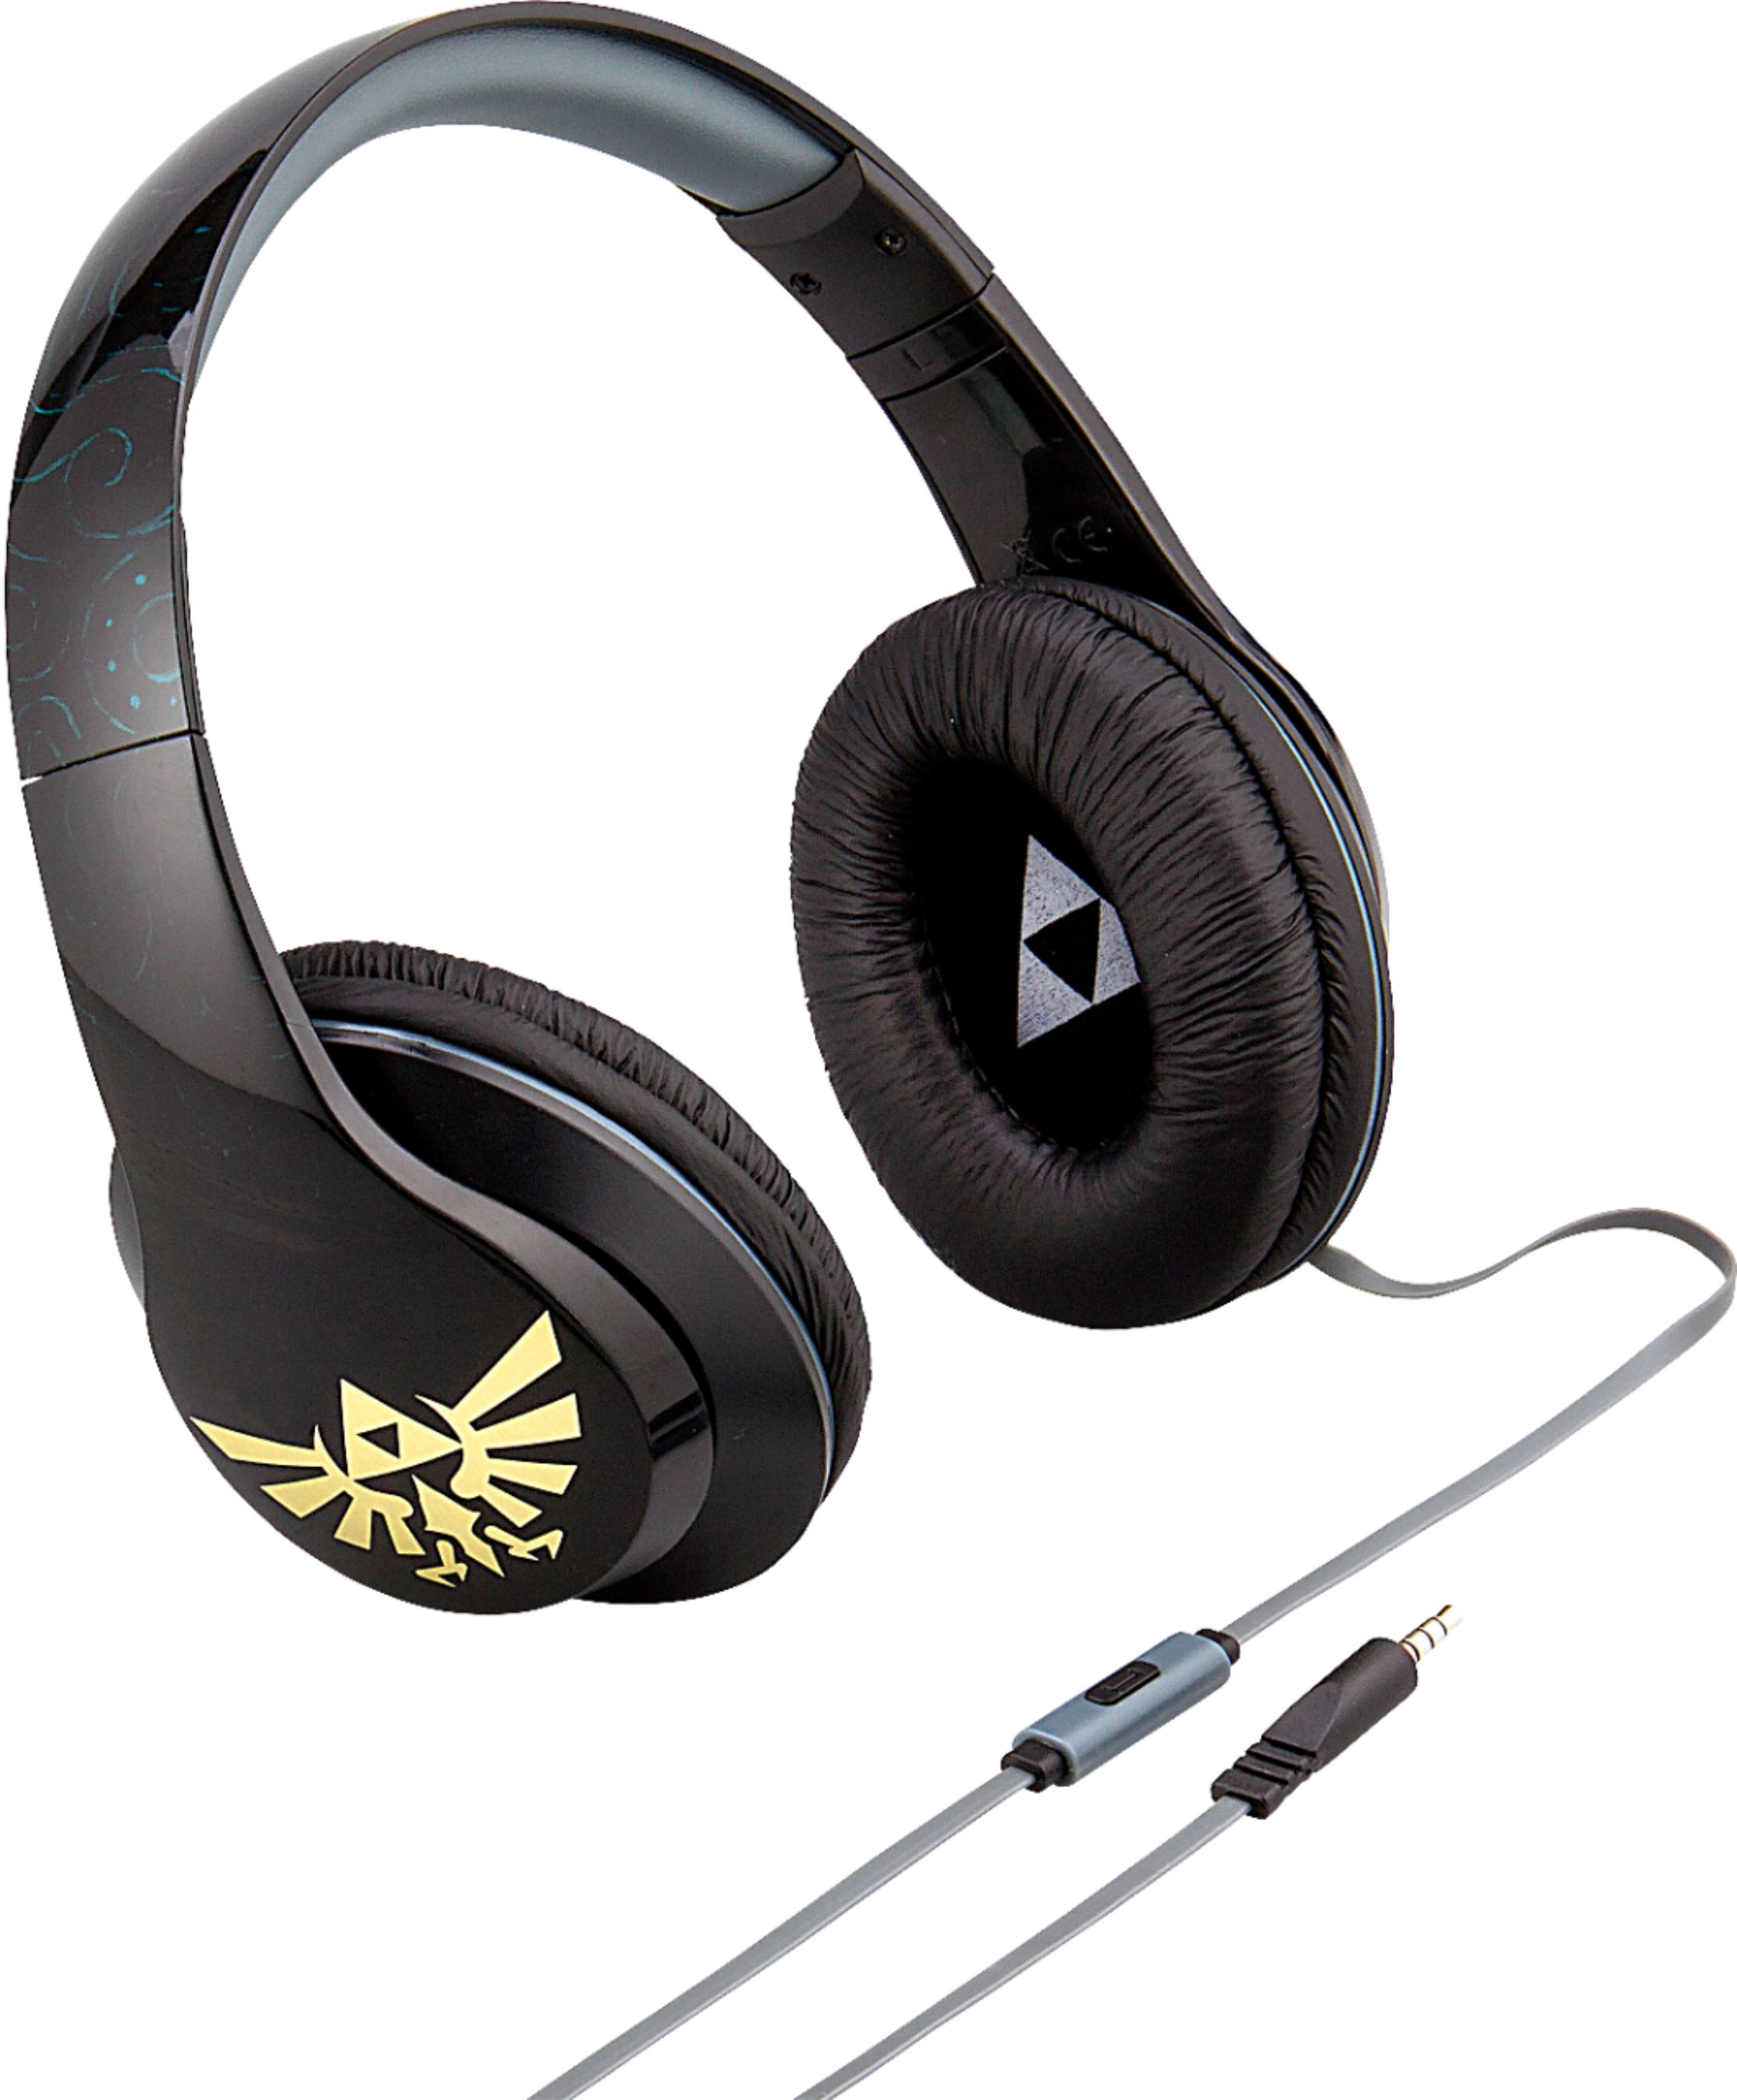 Angle View: KIDdesigns - eKids Zelda Co Branded Headphones - Black